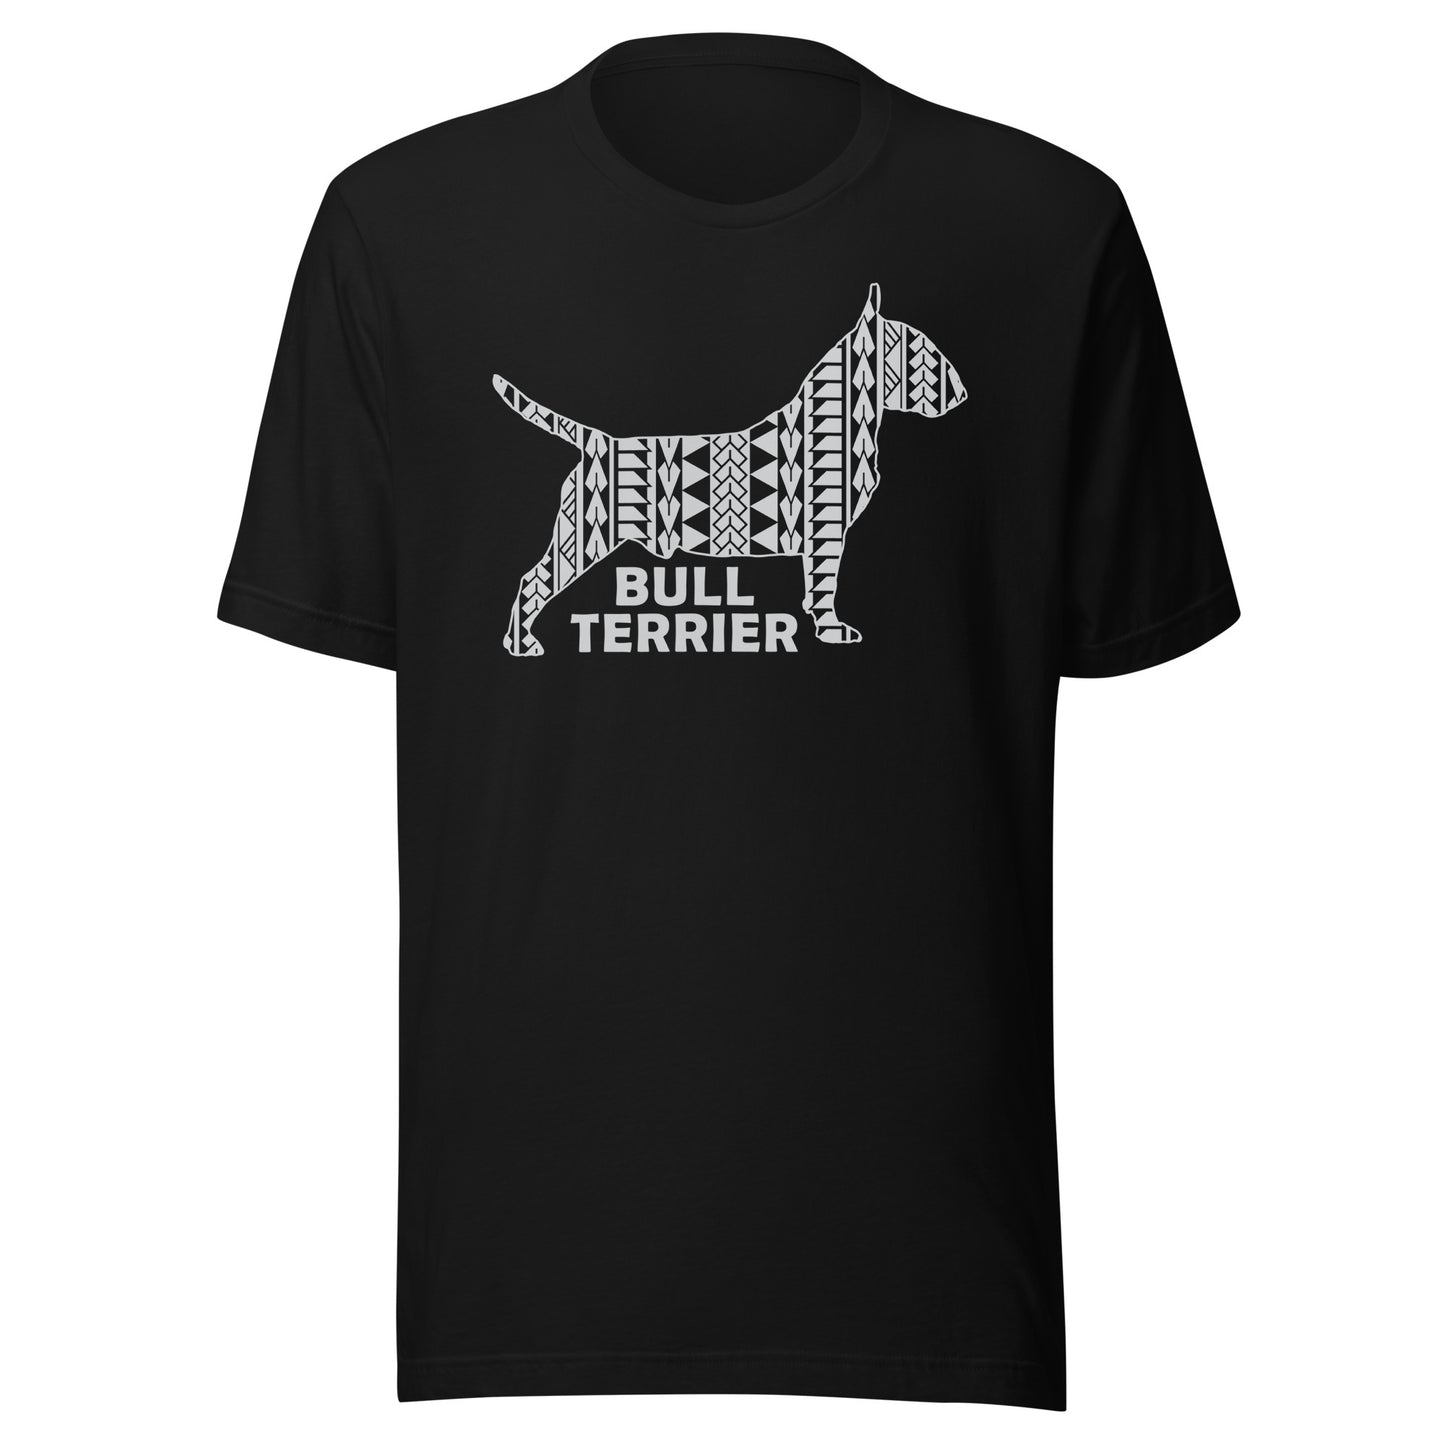 Bull Terrier Polynesian t-shirt black by Dog Artistry.